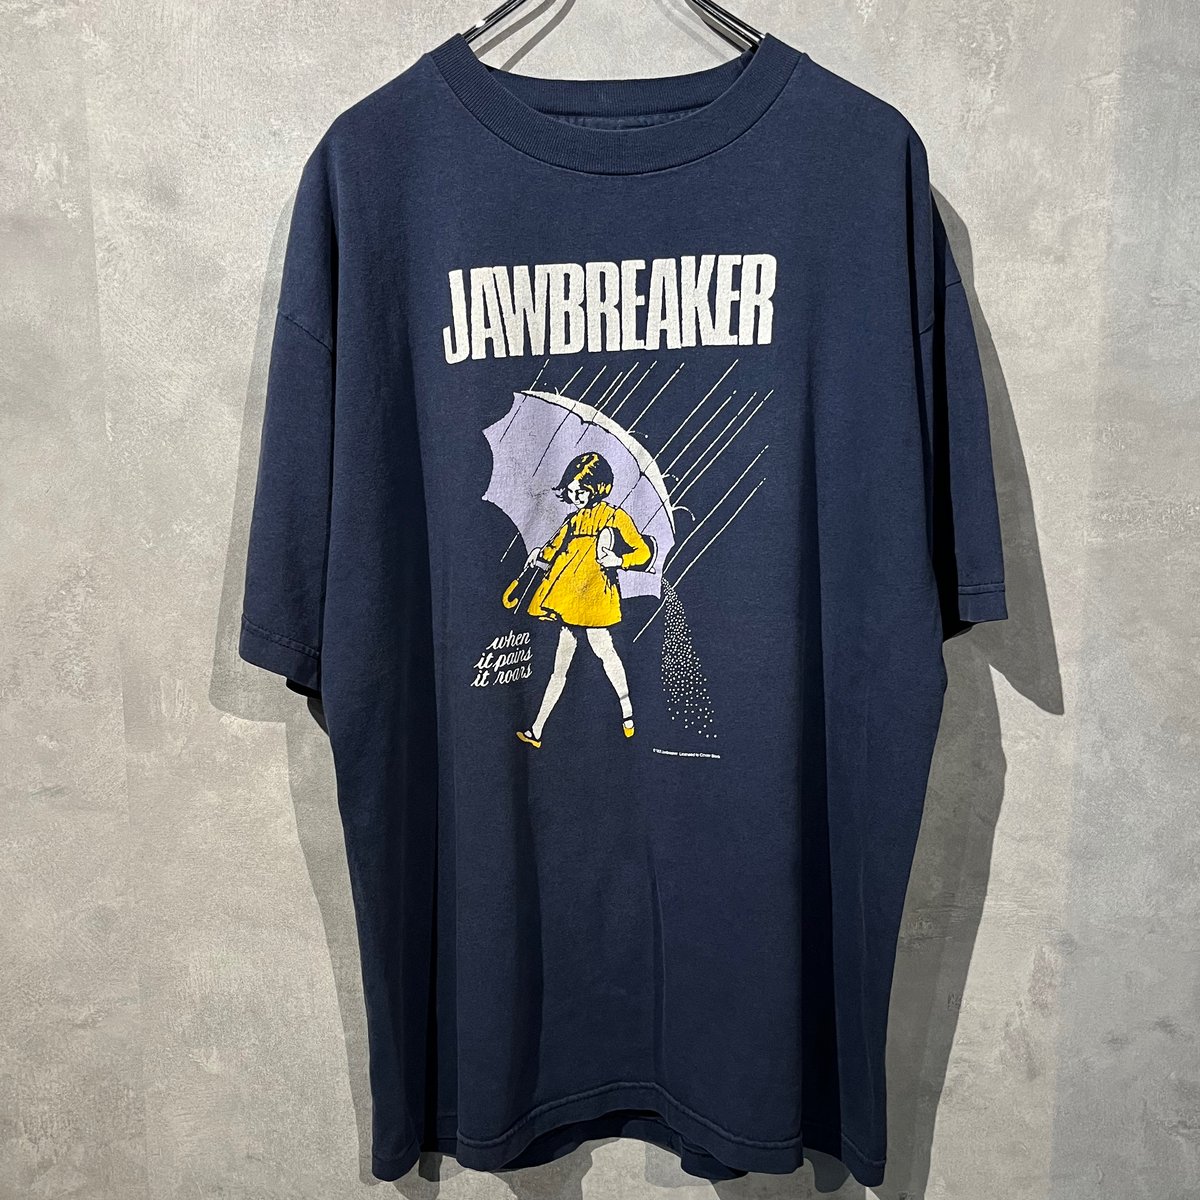 JAWBREAKER T-shirt | DIRTY BOOTH